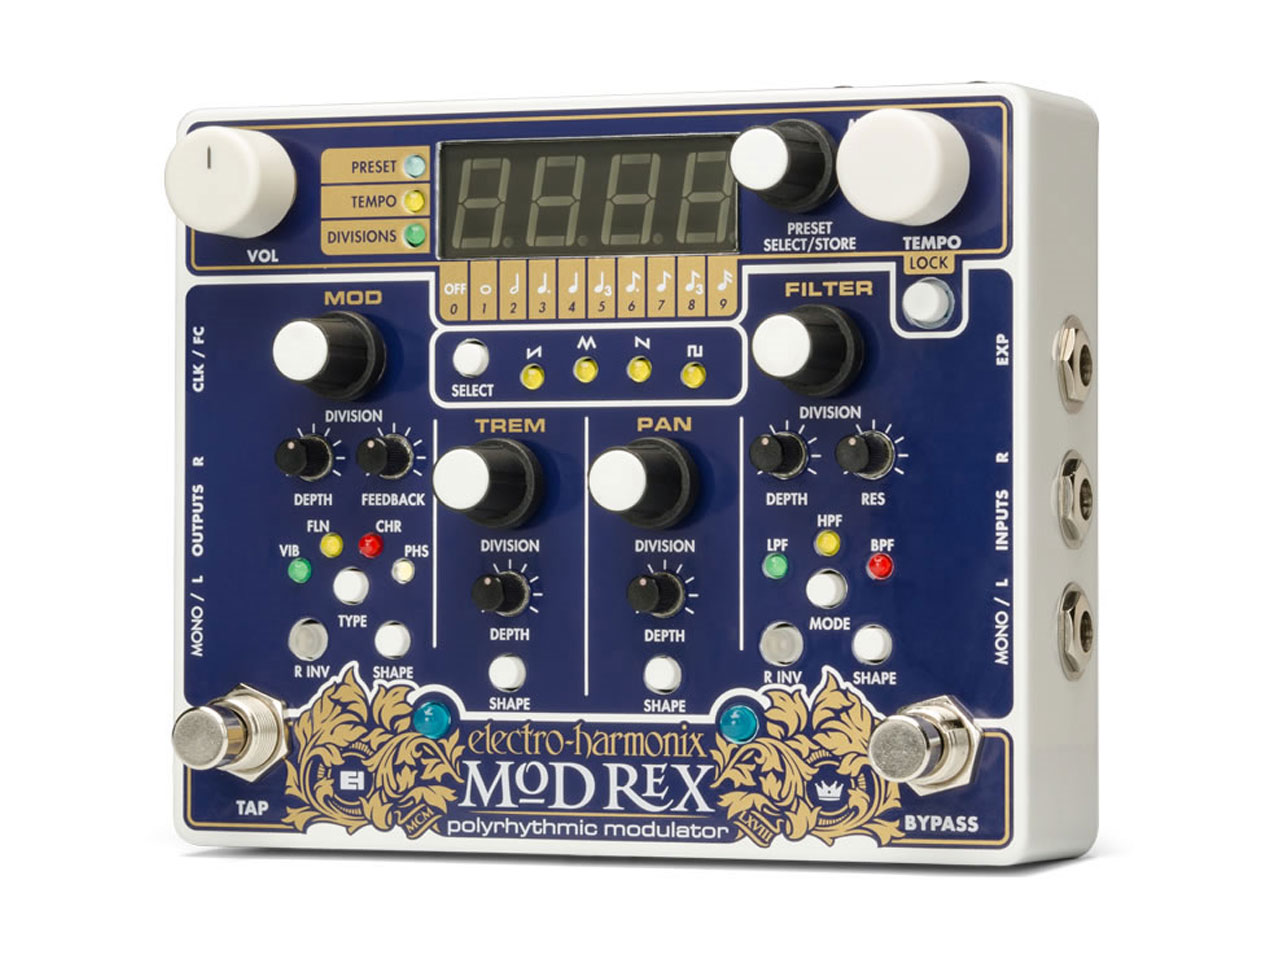 Electro-Harmonix(エレクトロハーモニックス) Mod Rex Polyrhythmic modulator